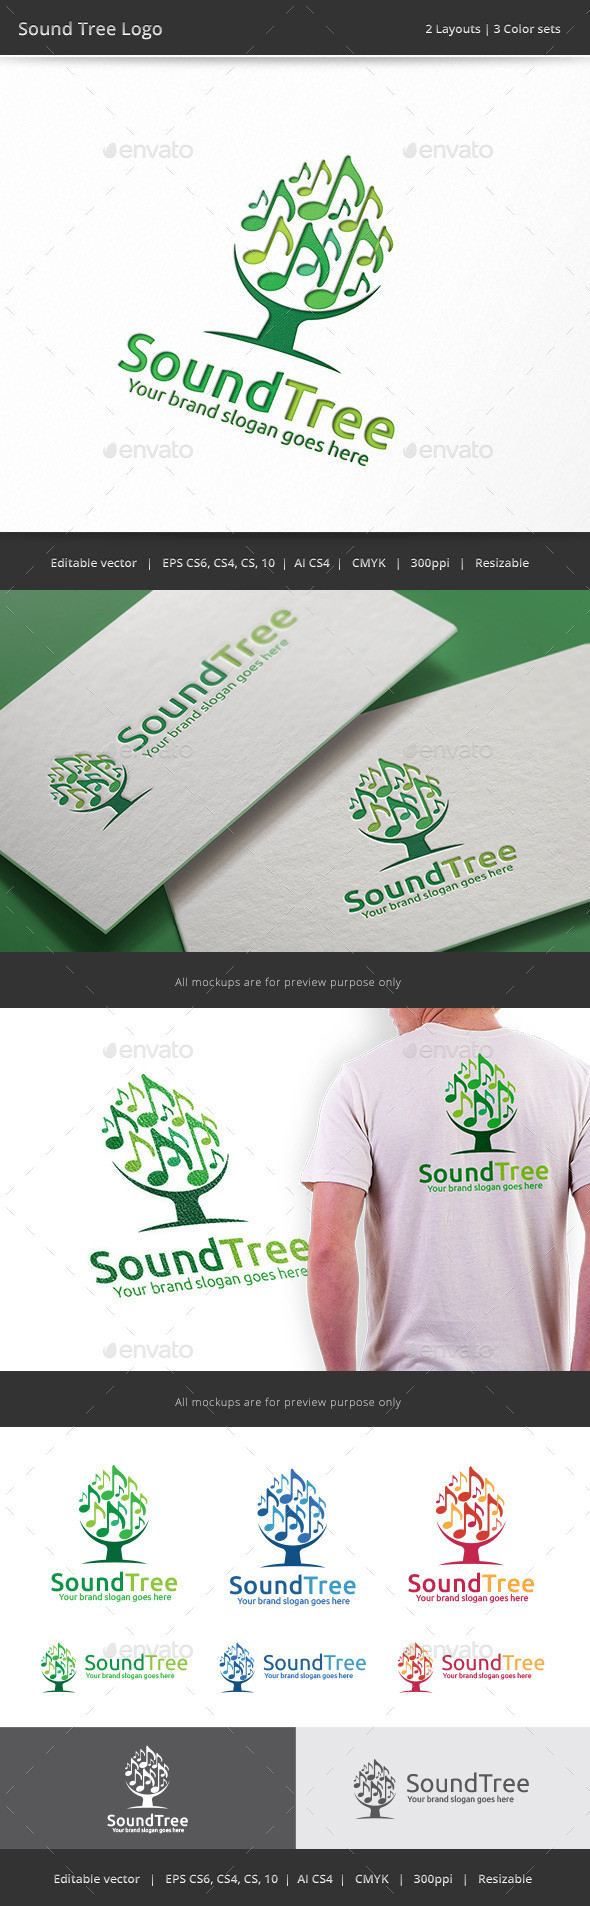 Sound tree